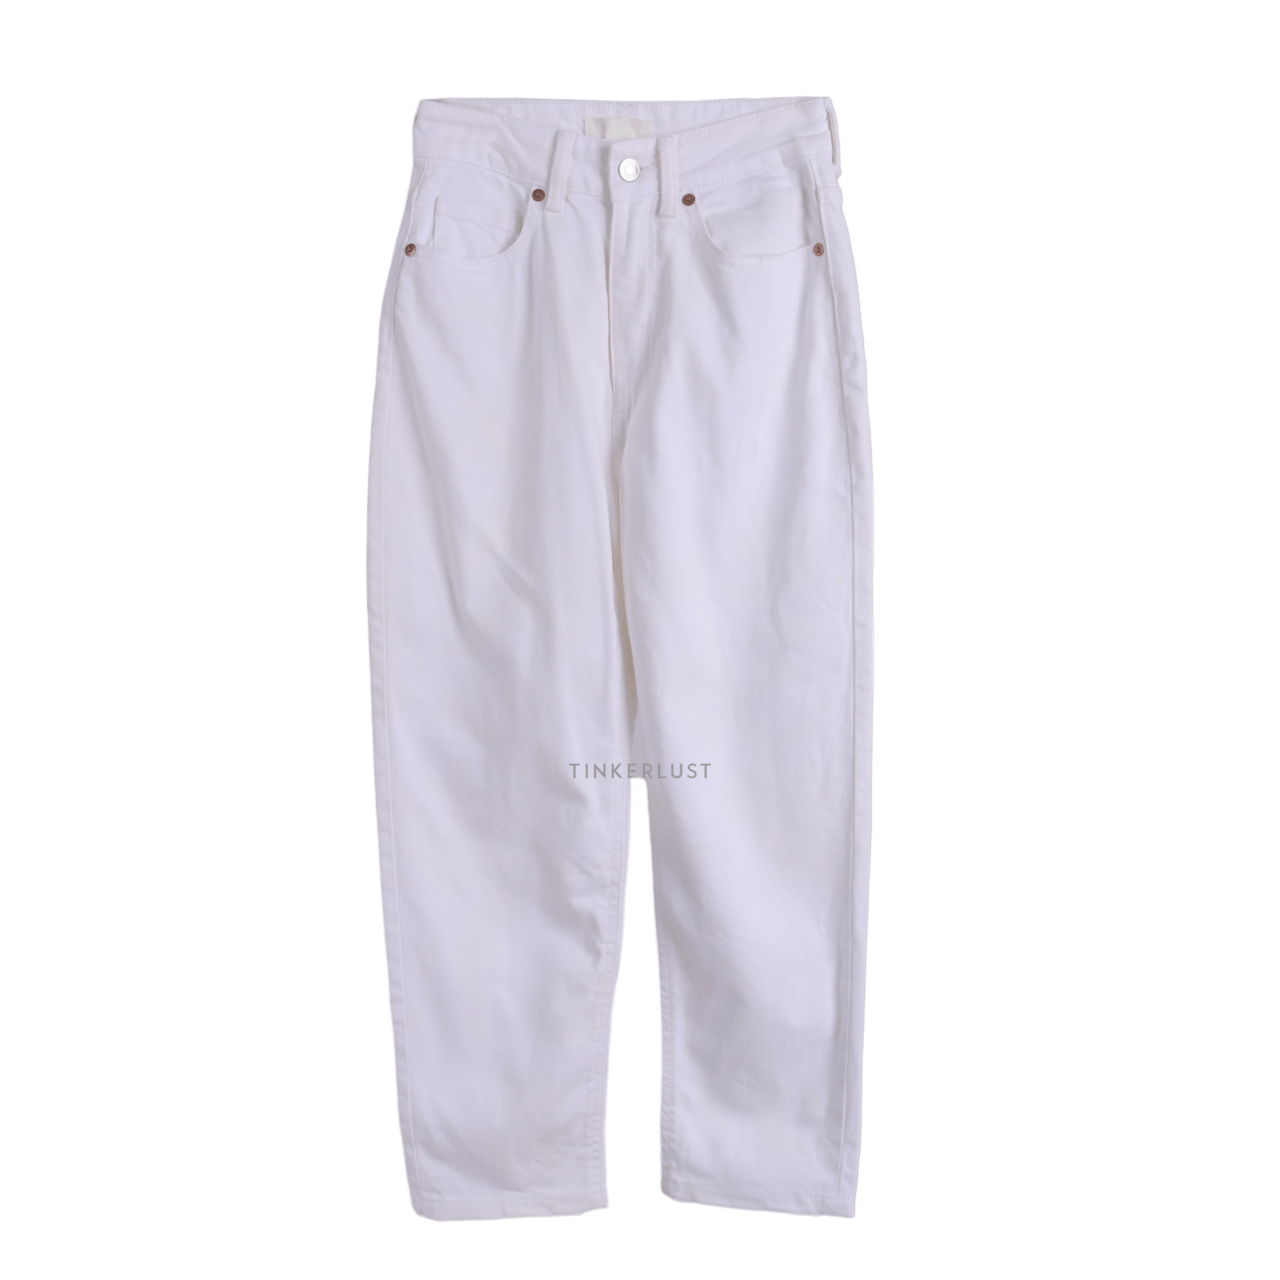 H&M White High Waist Jeans Long Pants